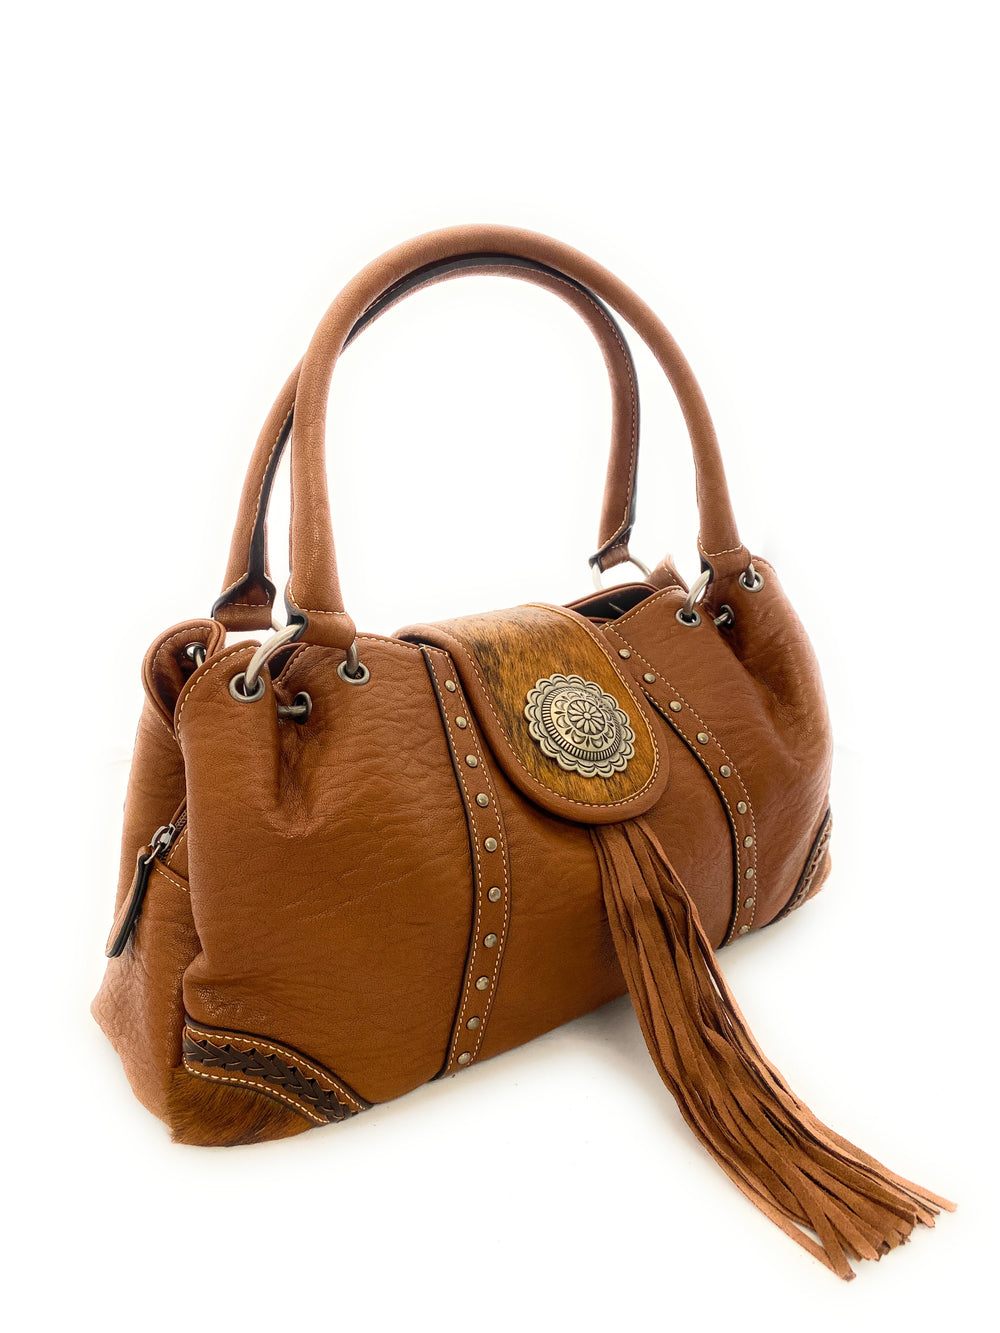 Bandana by American West Dallas Orange Sun Zip Top Tote | Tote, Bling purses,  Leather women